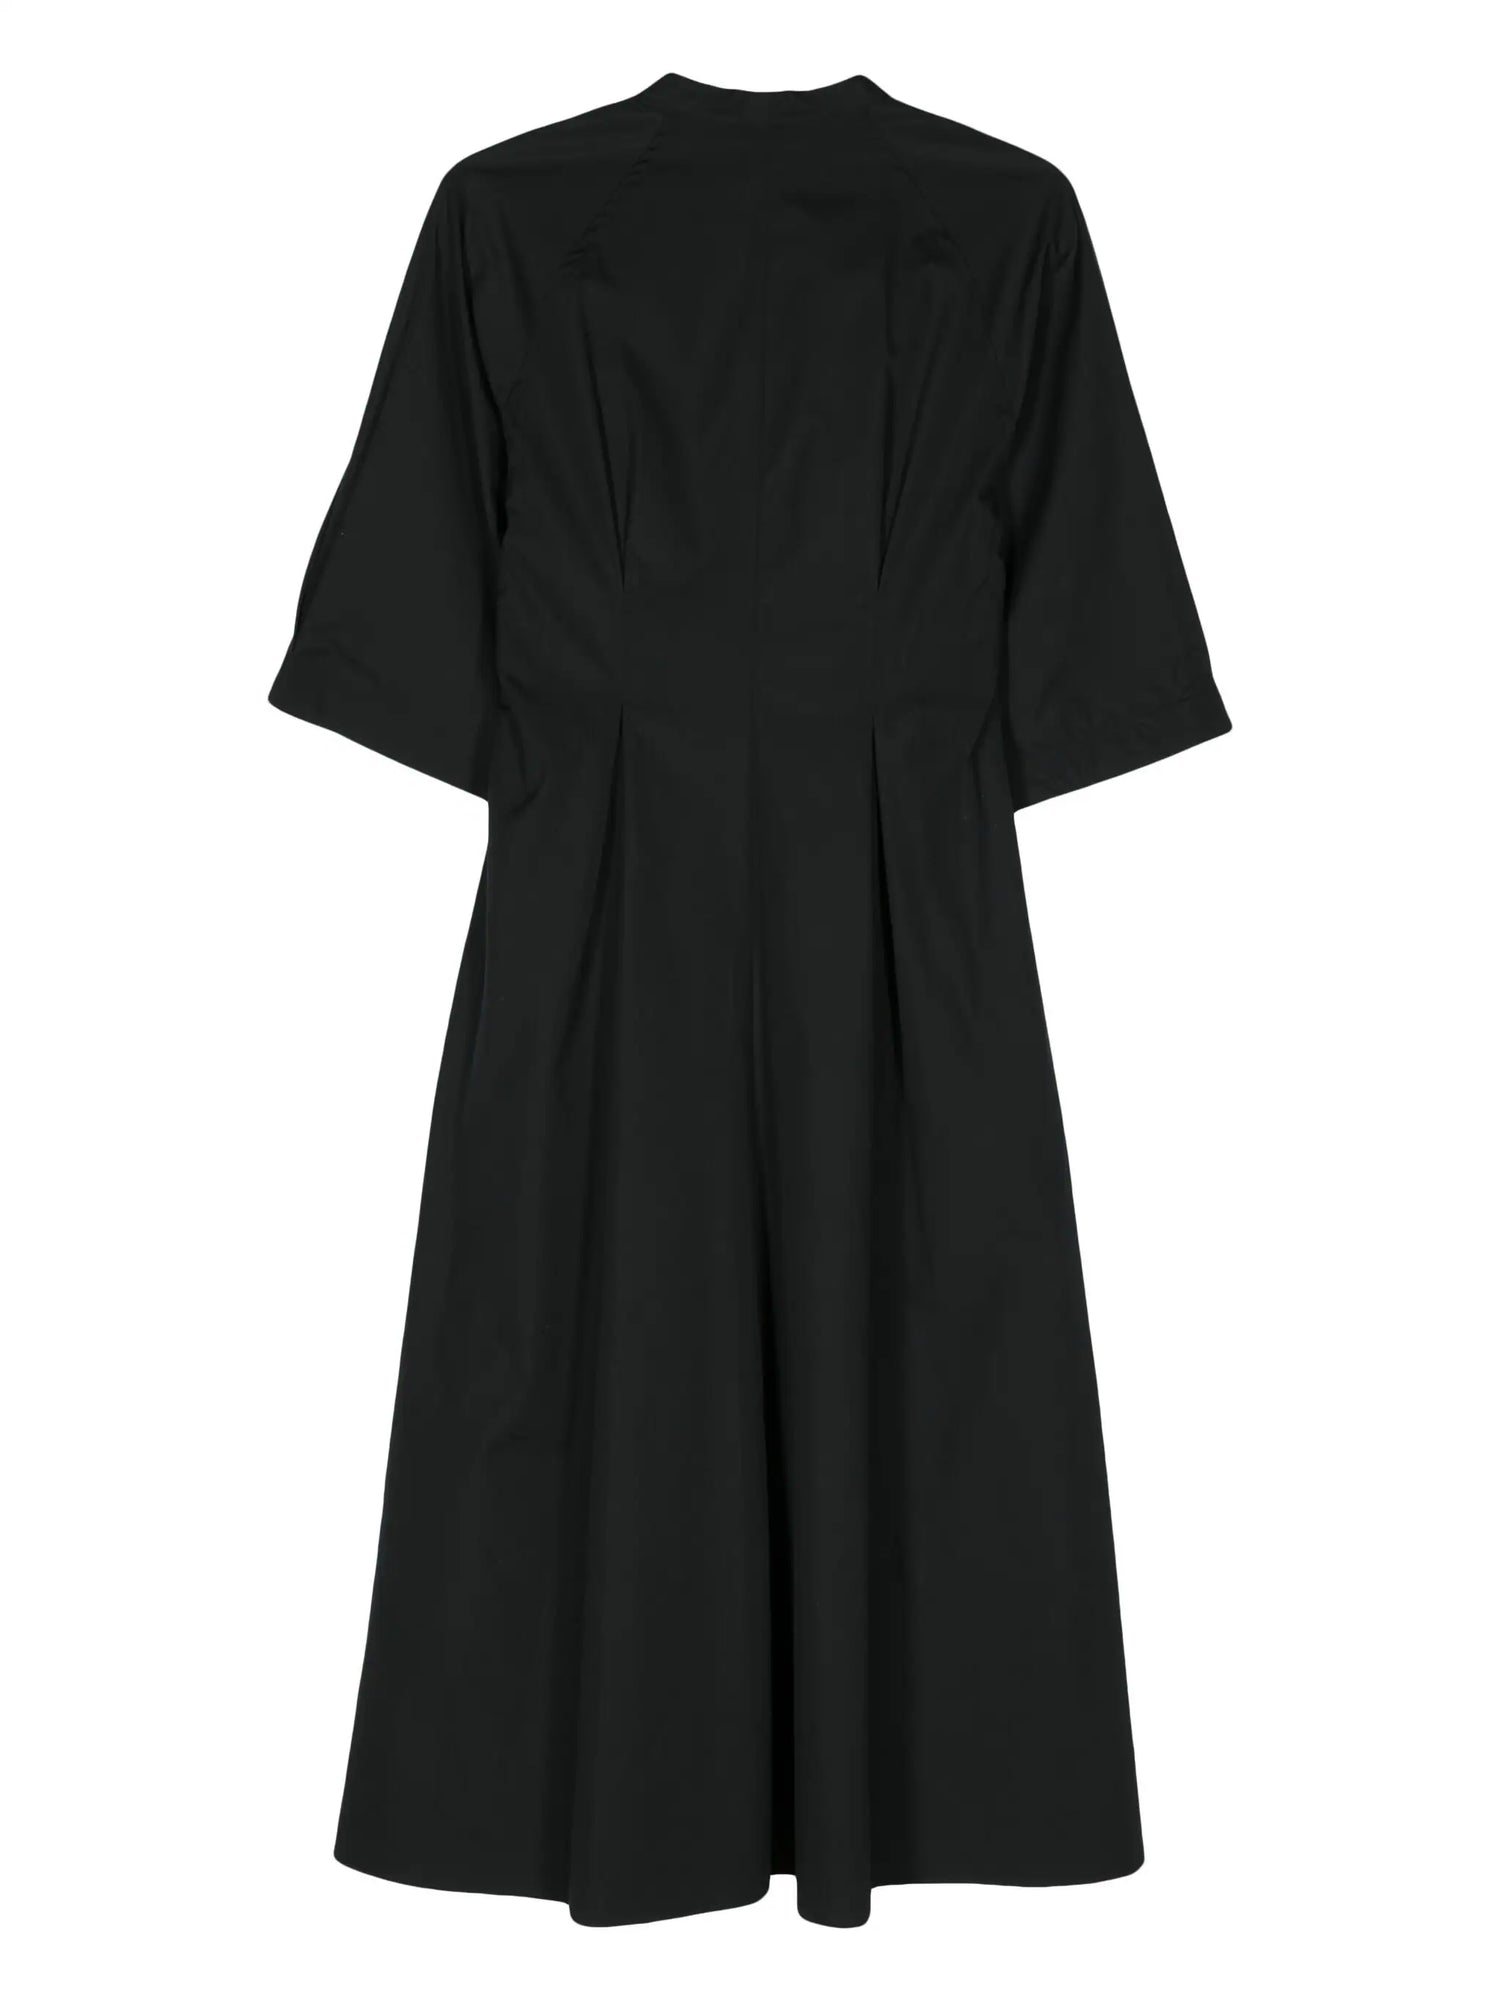 Cotton poplin dress, black